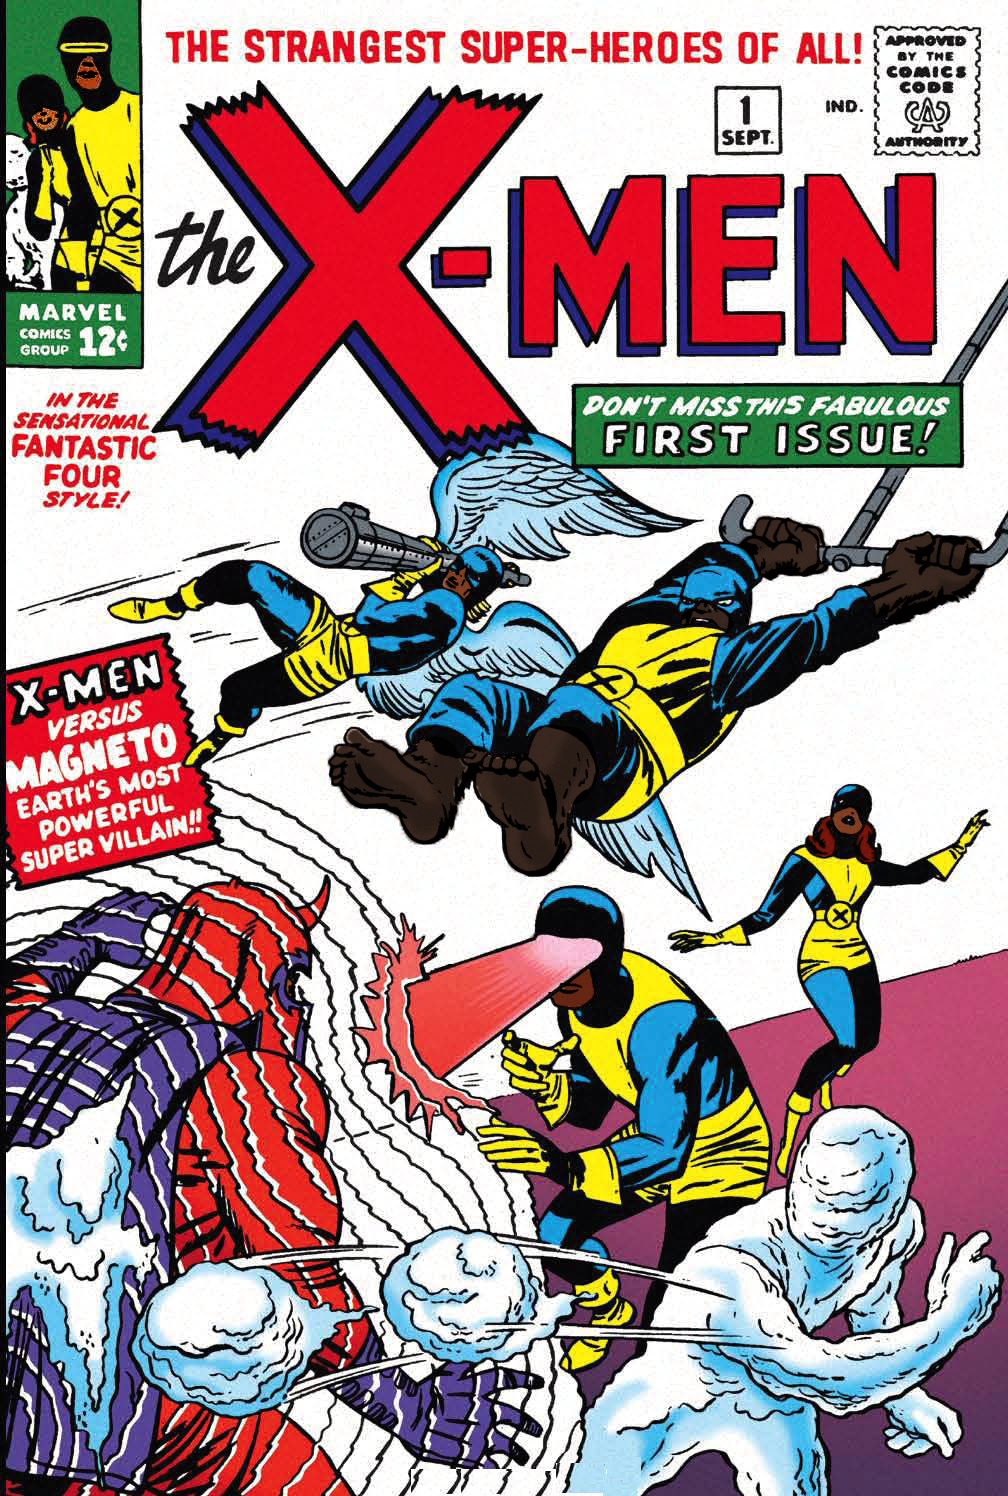 The X-Men '97 Team Join Mutantkind's Biggest Night in a New 'X-Men